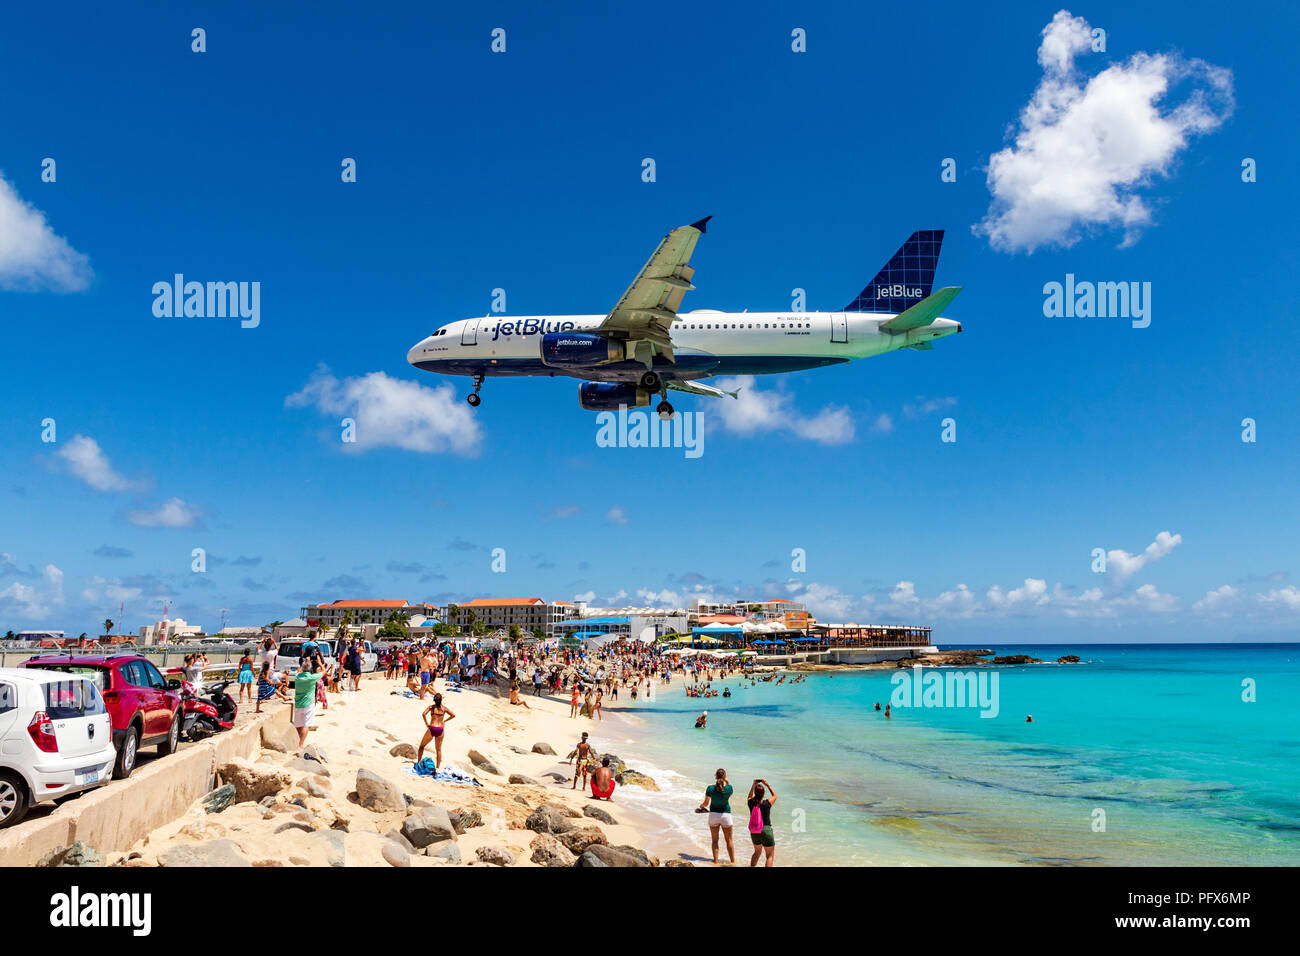 A Jetblue flight passes over Maho Beach and dozens of tourists just before landing at Princess Juliana International Airport in Saint Martin. Stock Photo